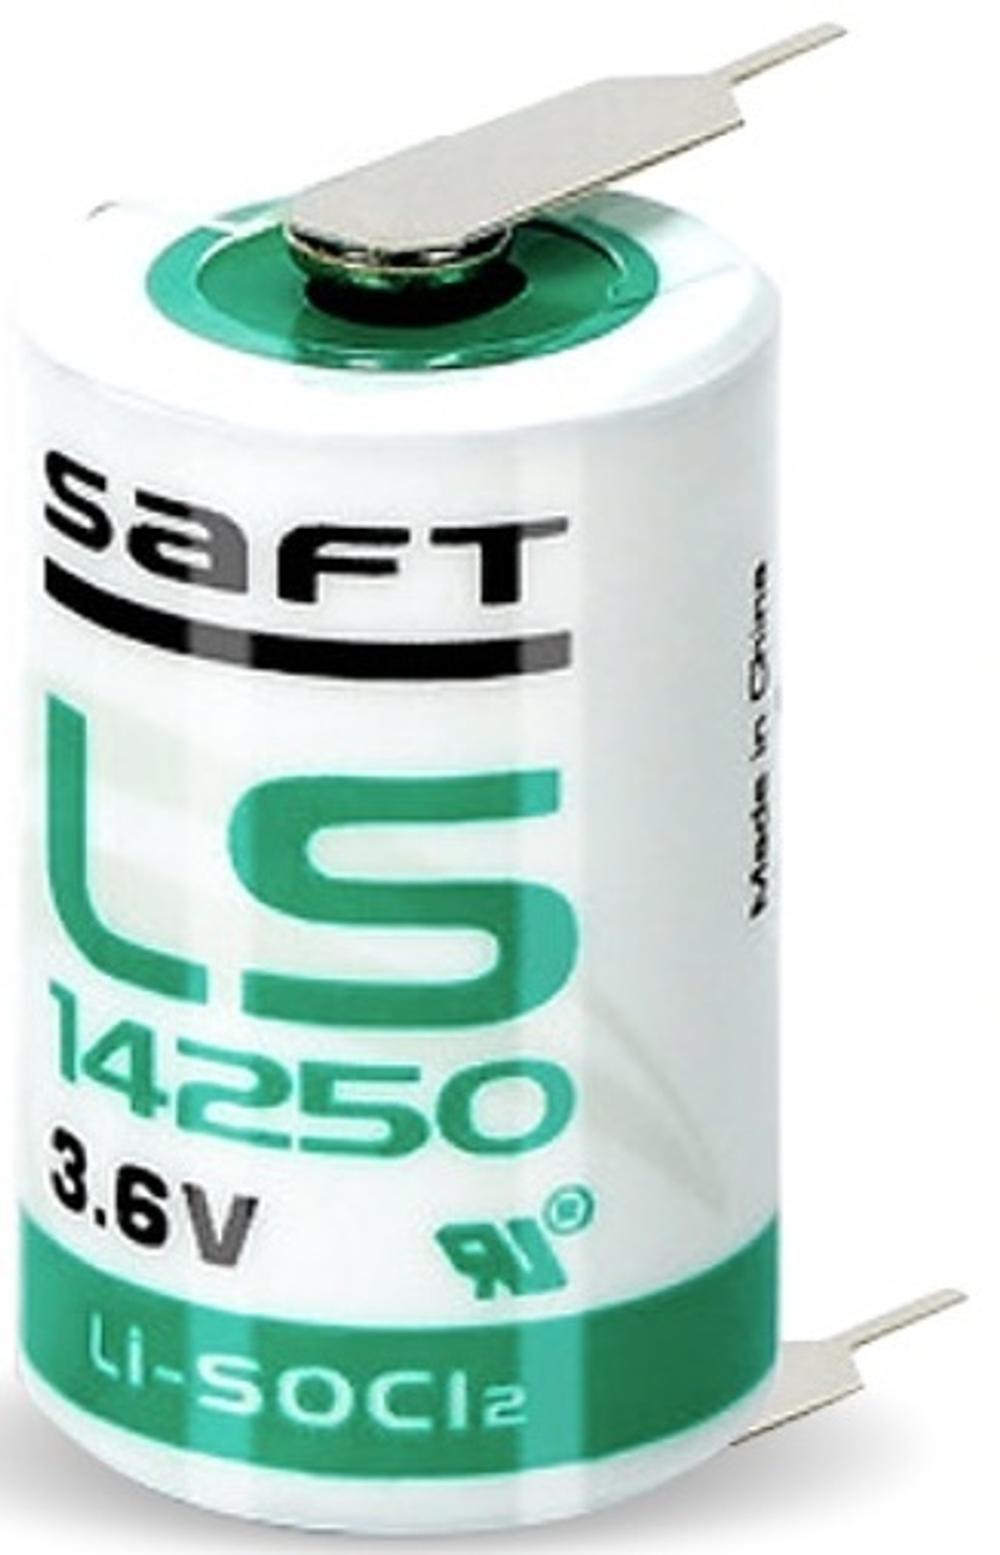 Батарейка литий +2 контакта Saft-LS14250 1/2AA 1.2Ah 3.6v